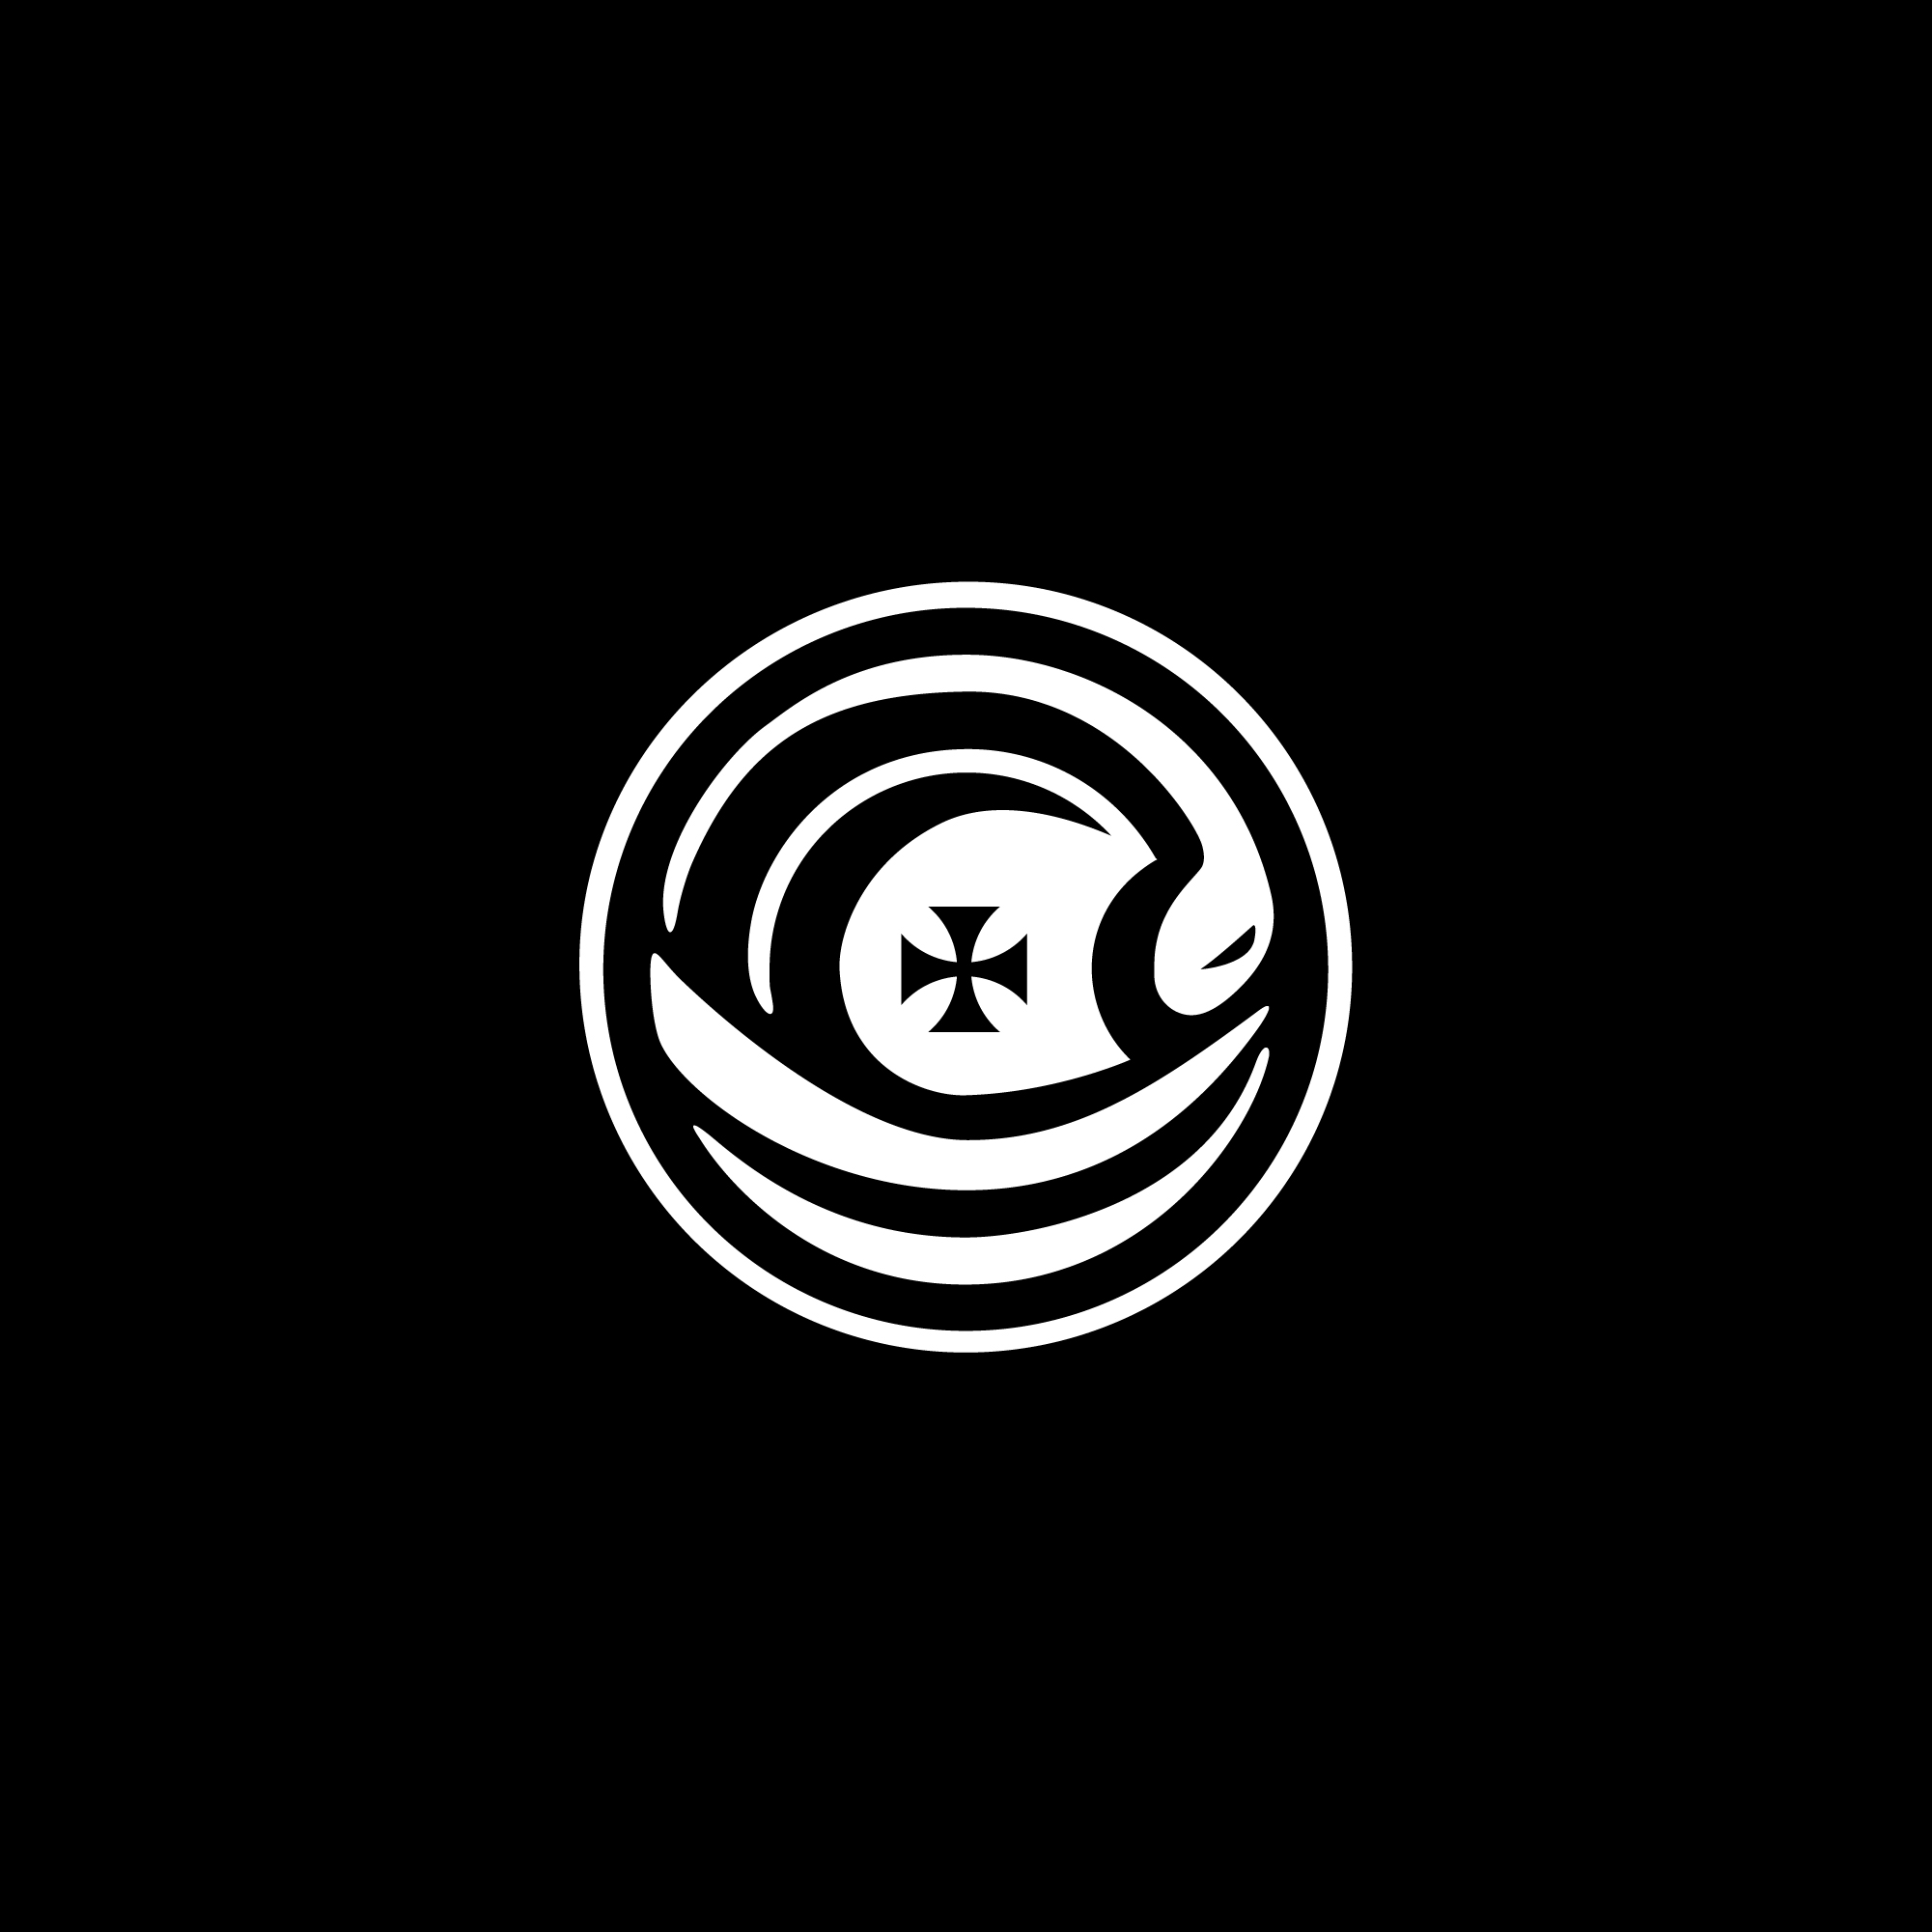 logo-design- black-white-minimalist-round-circle-ship-flag